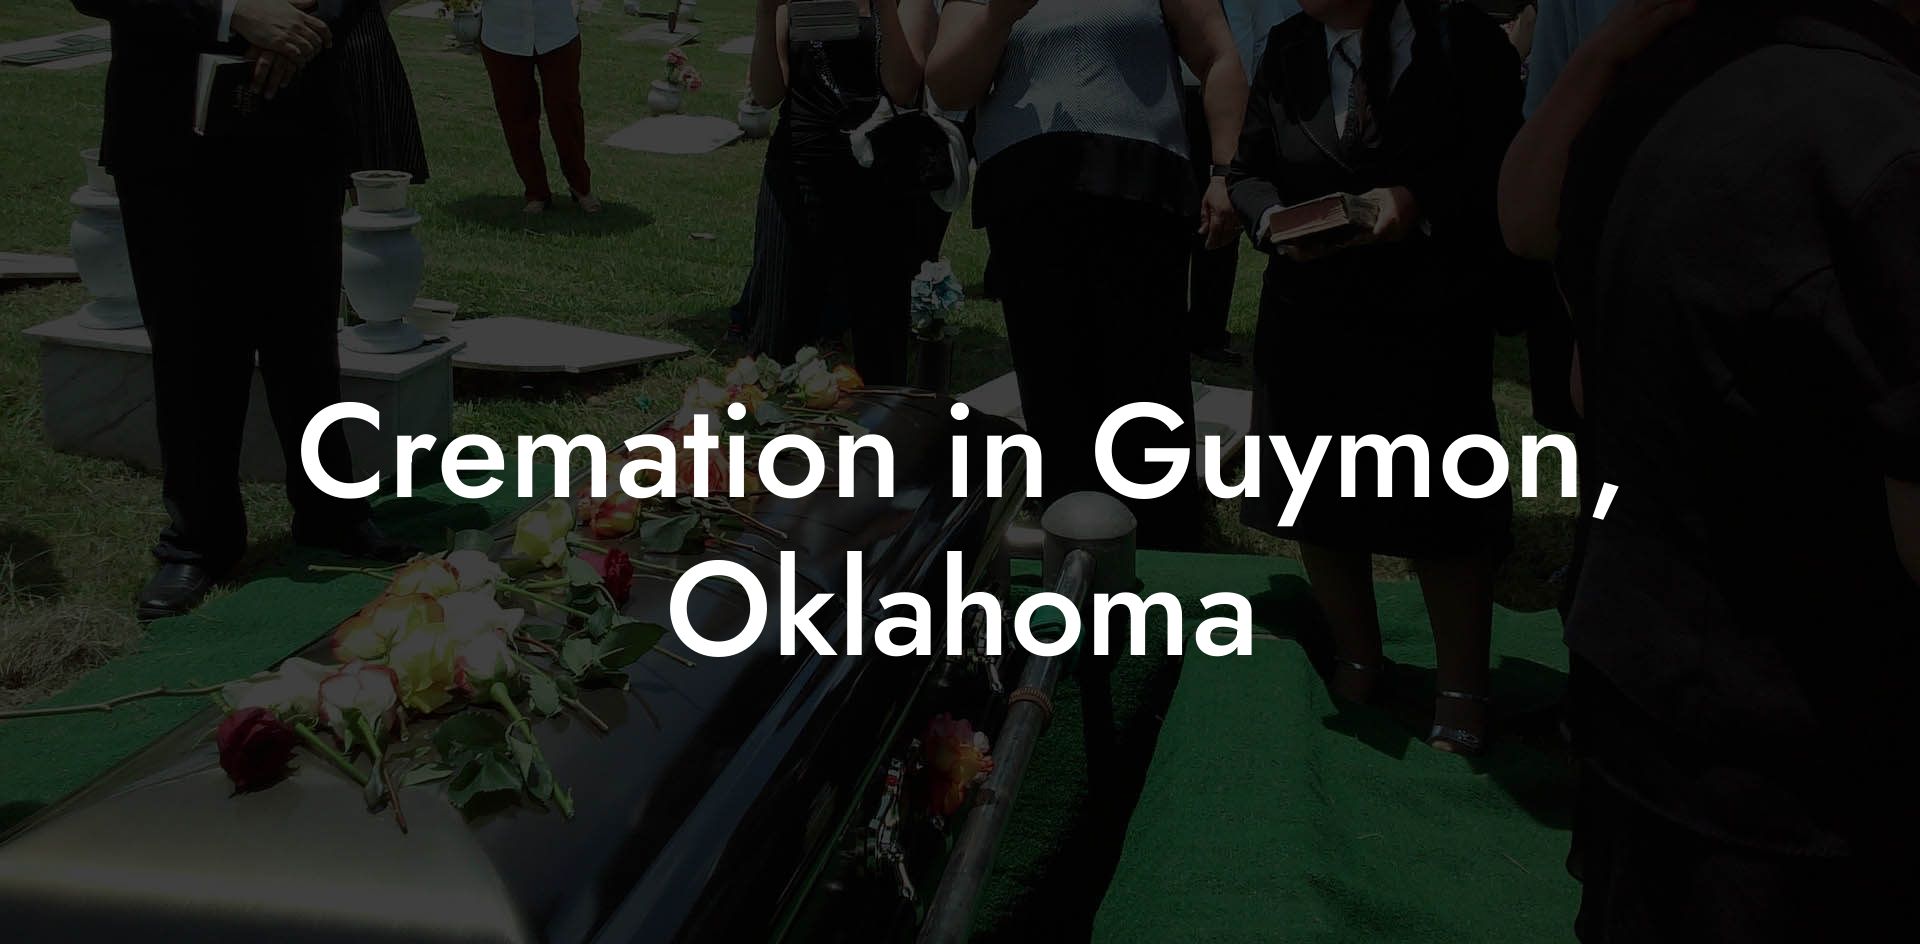 Cremation in Guymon, Oklahoma